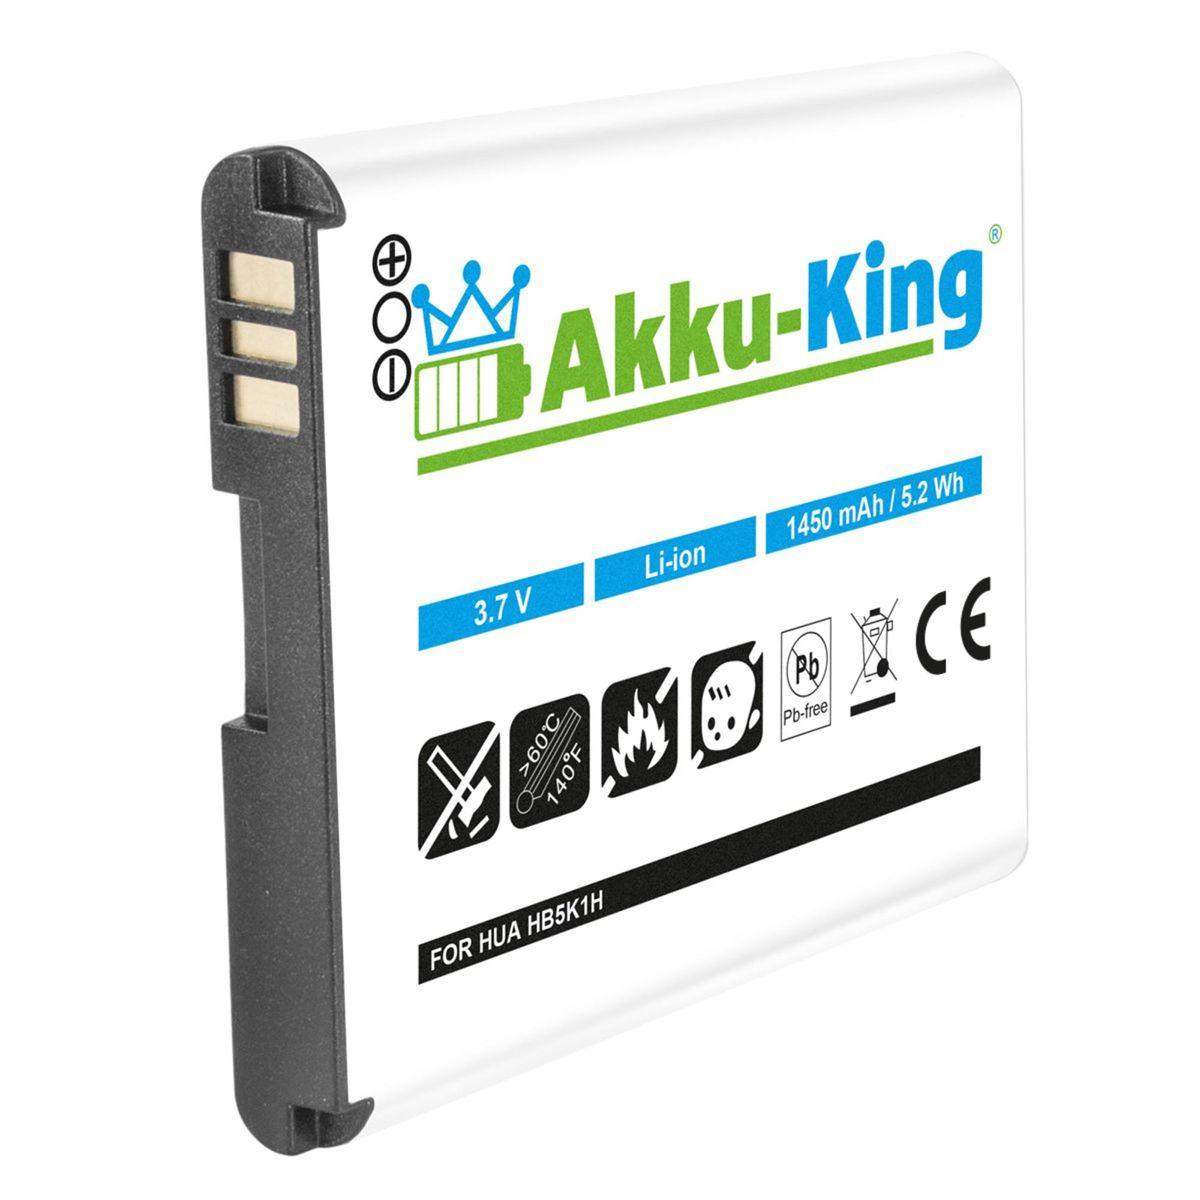 Handy-Akku, mit HB5K1H Akku 3.7 kompatibel Li-Ion Huawei AKKU-KING Volt, 1450mAh